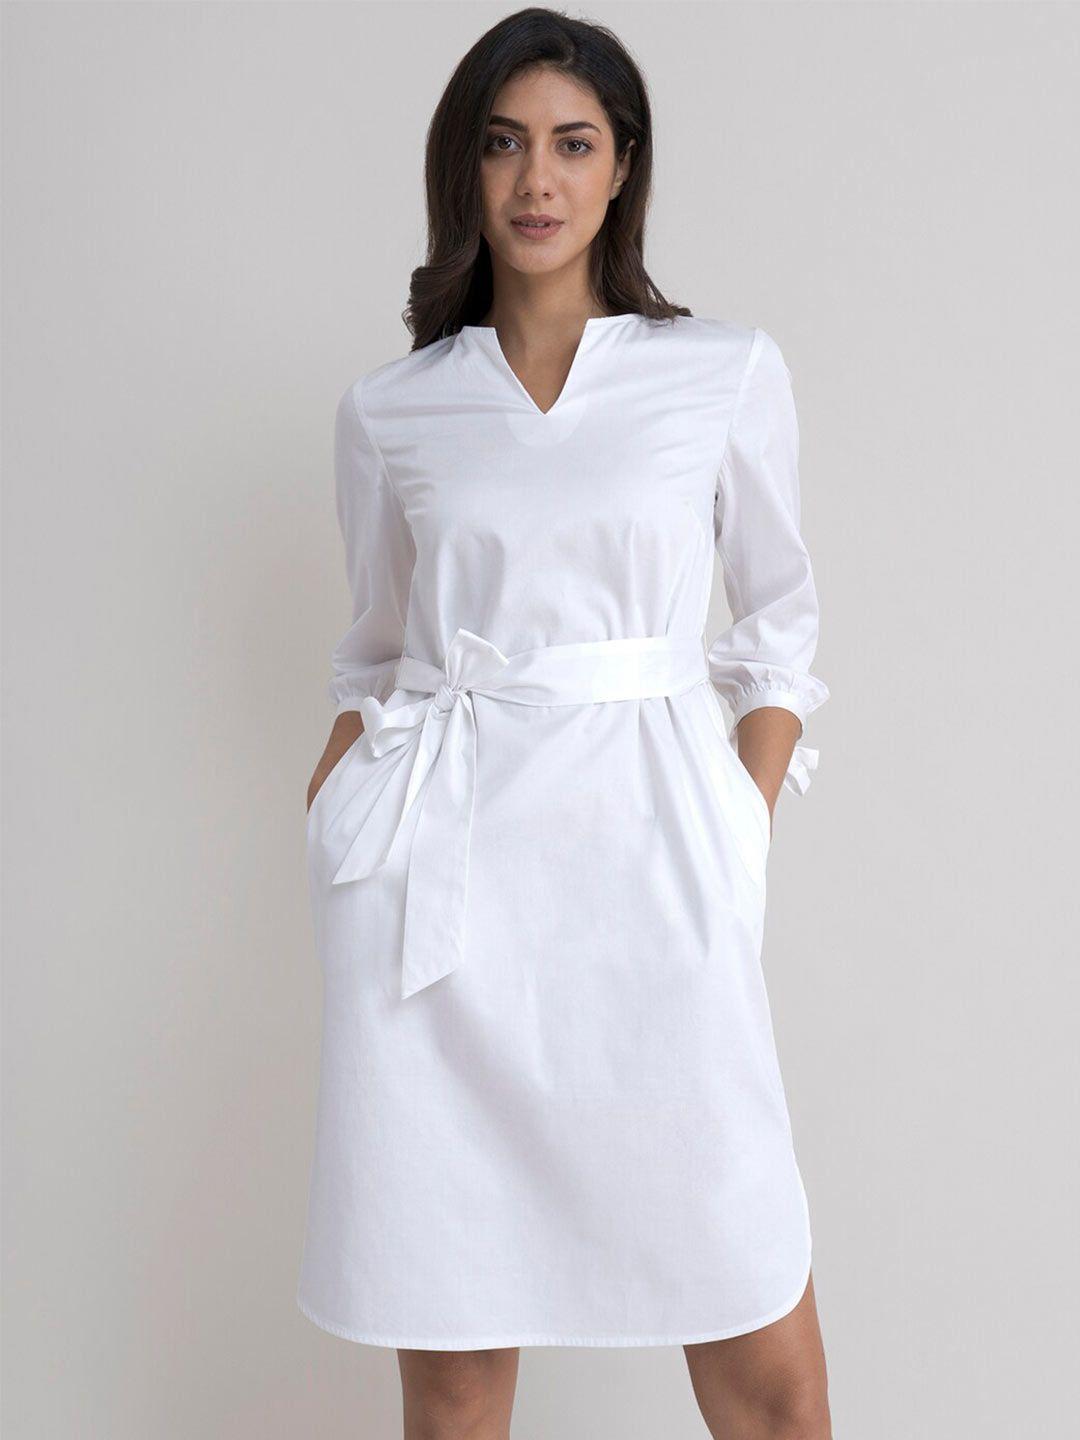 fablestreet-white-a-line-dress